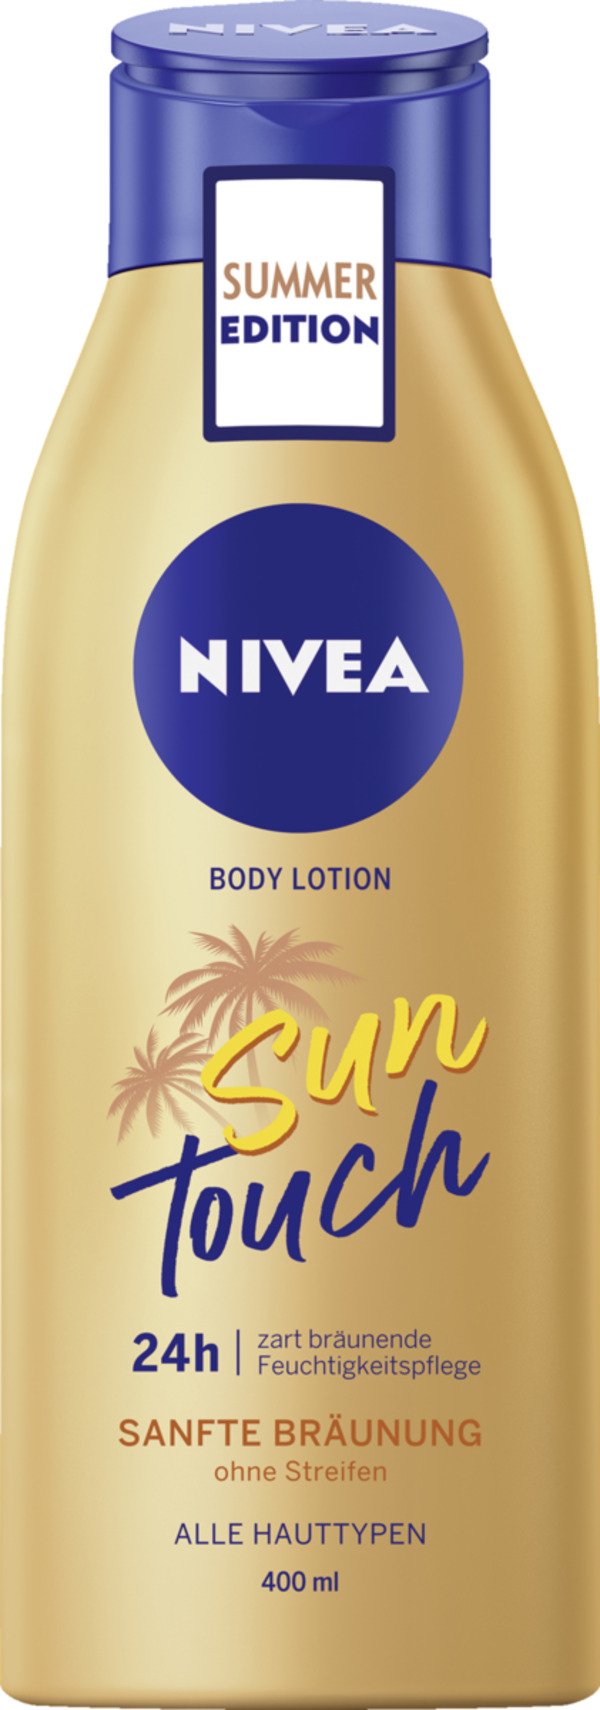 Bild 1 von NIVEA Bodylotion Sun Touch 14.98 EUR/1 l